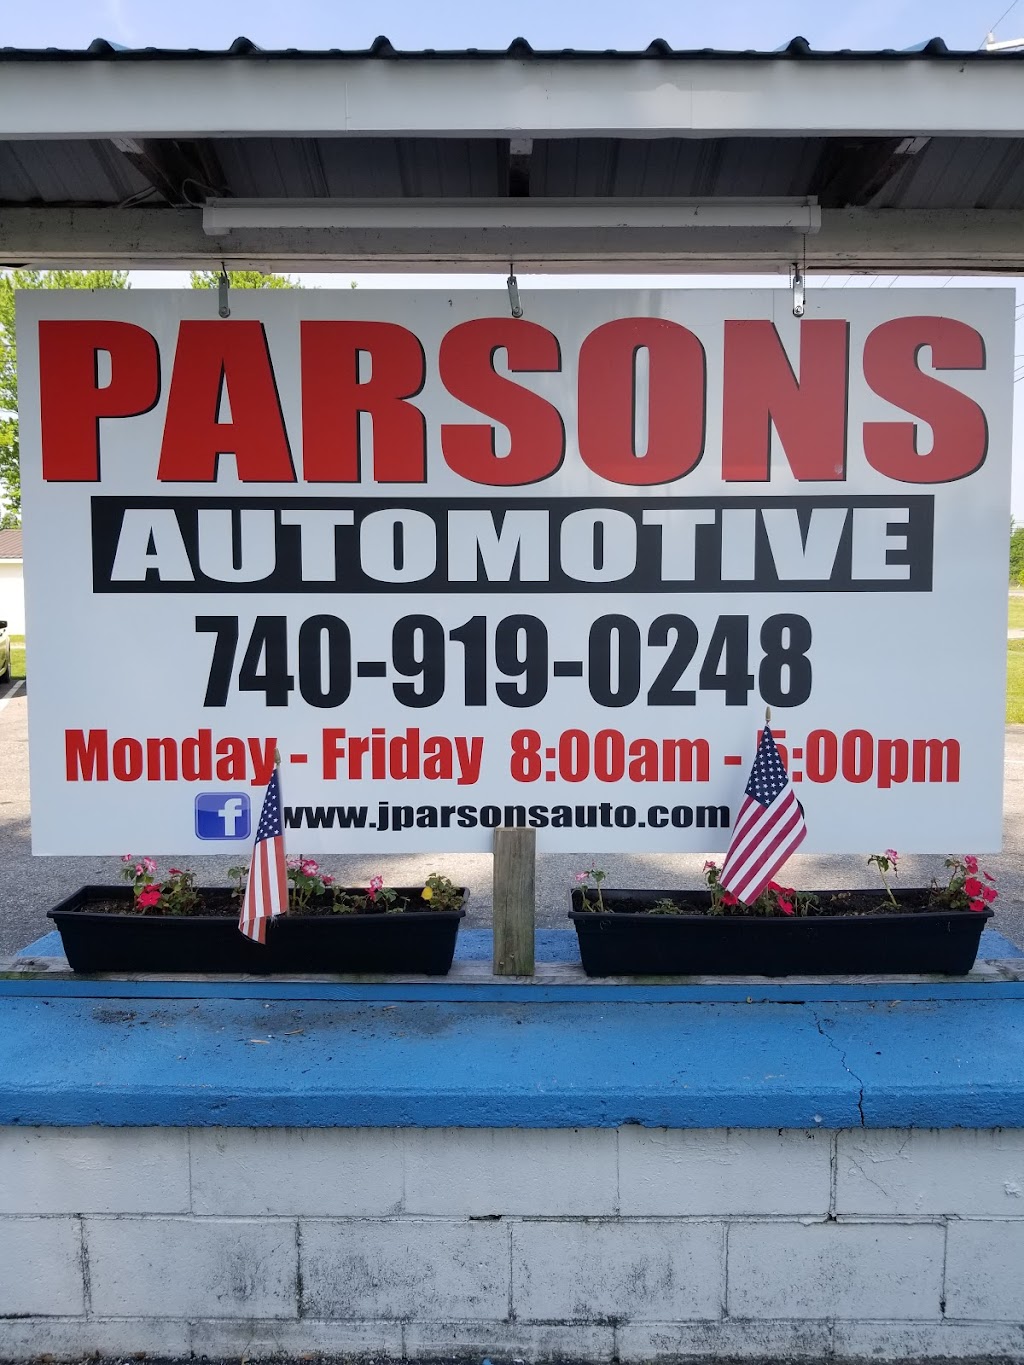 Parsons Automotive | 299 W Broad St, Pataskala, OH 43062 | Phone: (740) 919-0248